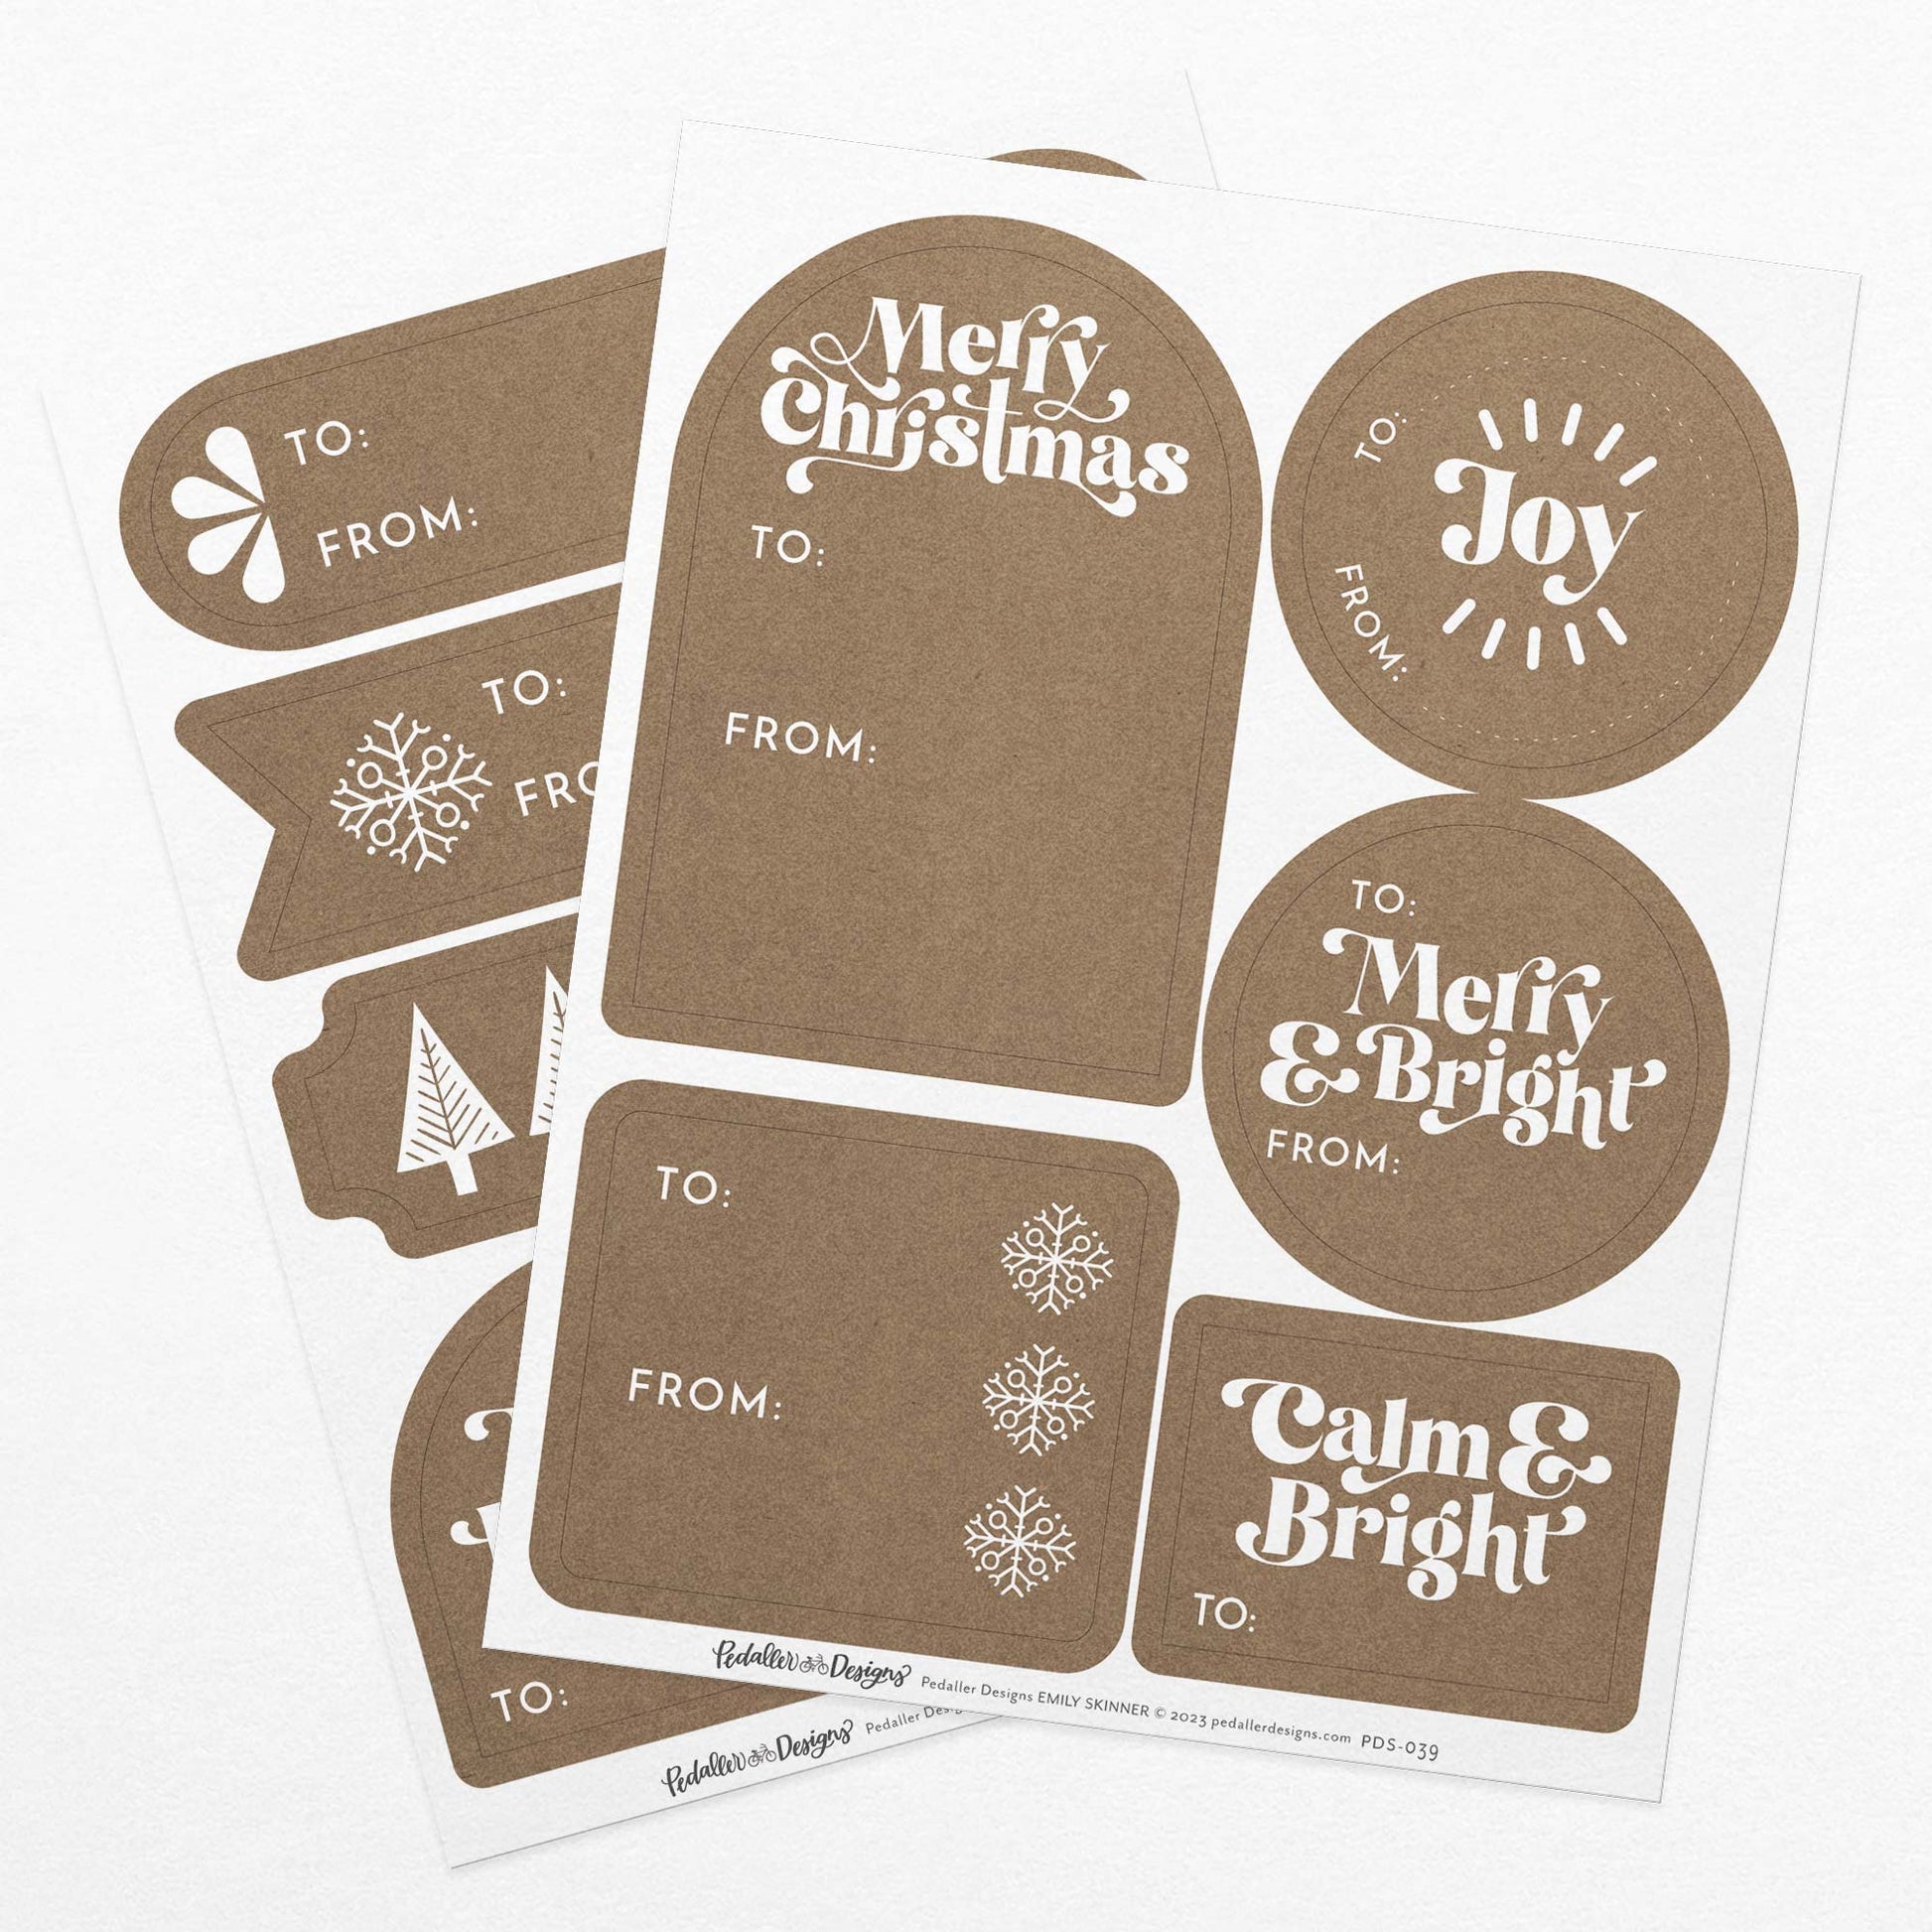 White Christmas - Paper & Sticker Kit